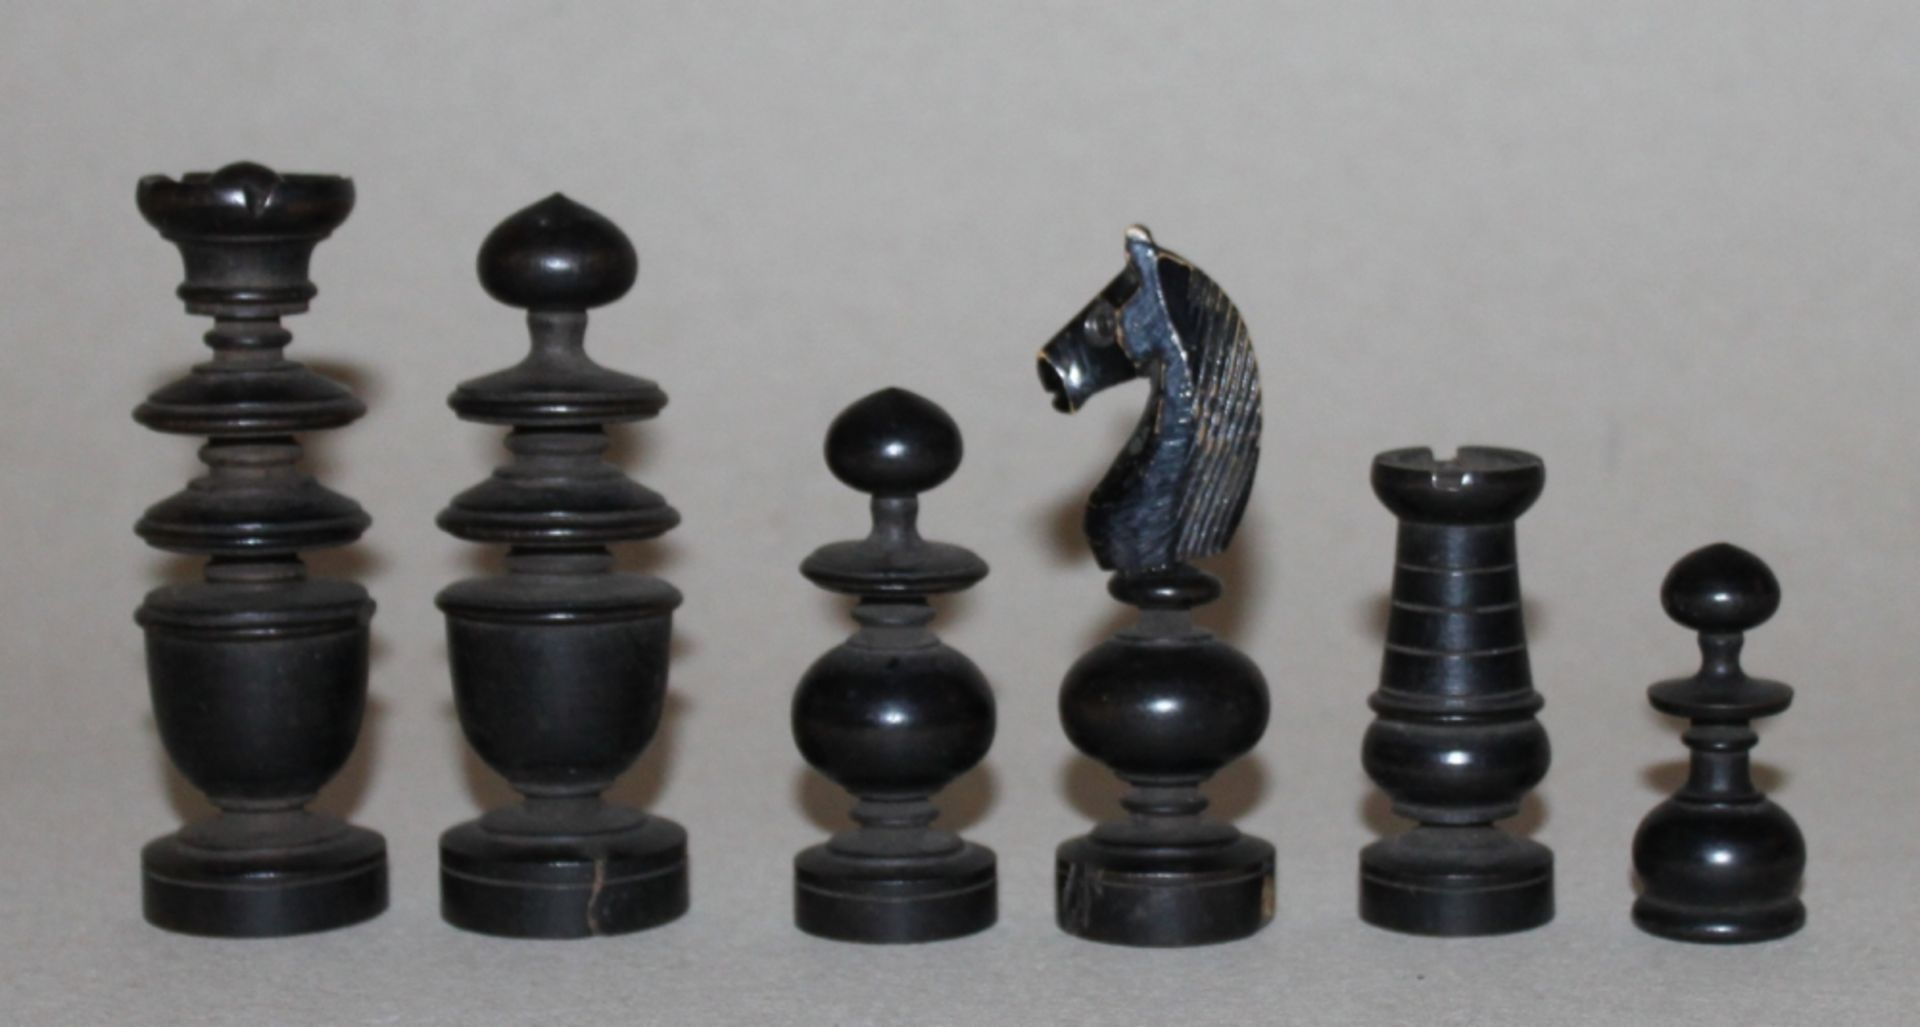 Europa. Schachfiguren aus Holz im Régence - Stil. - Bild 3 aus 3